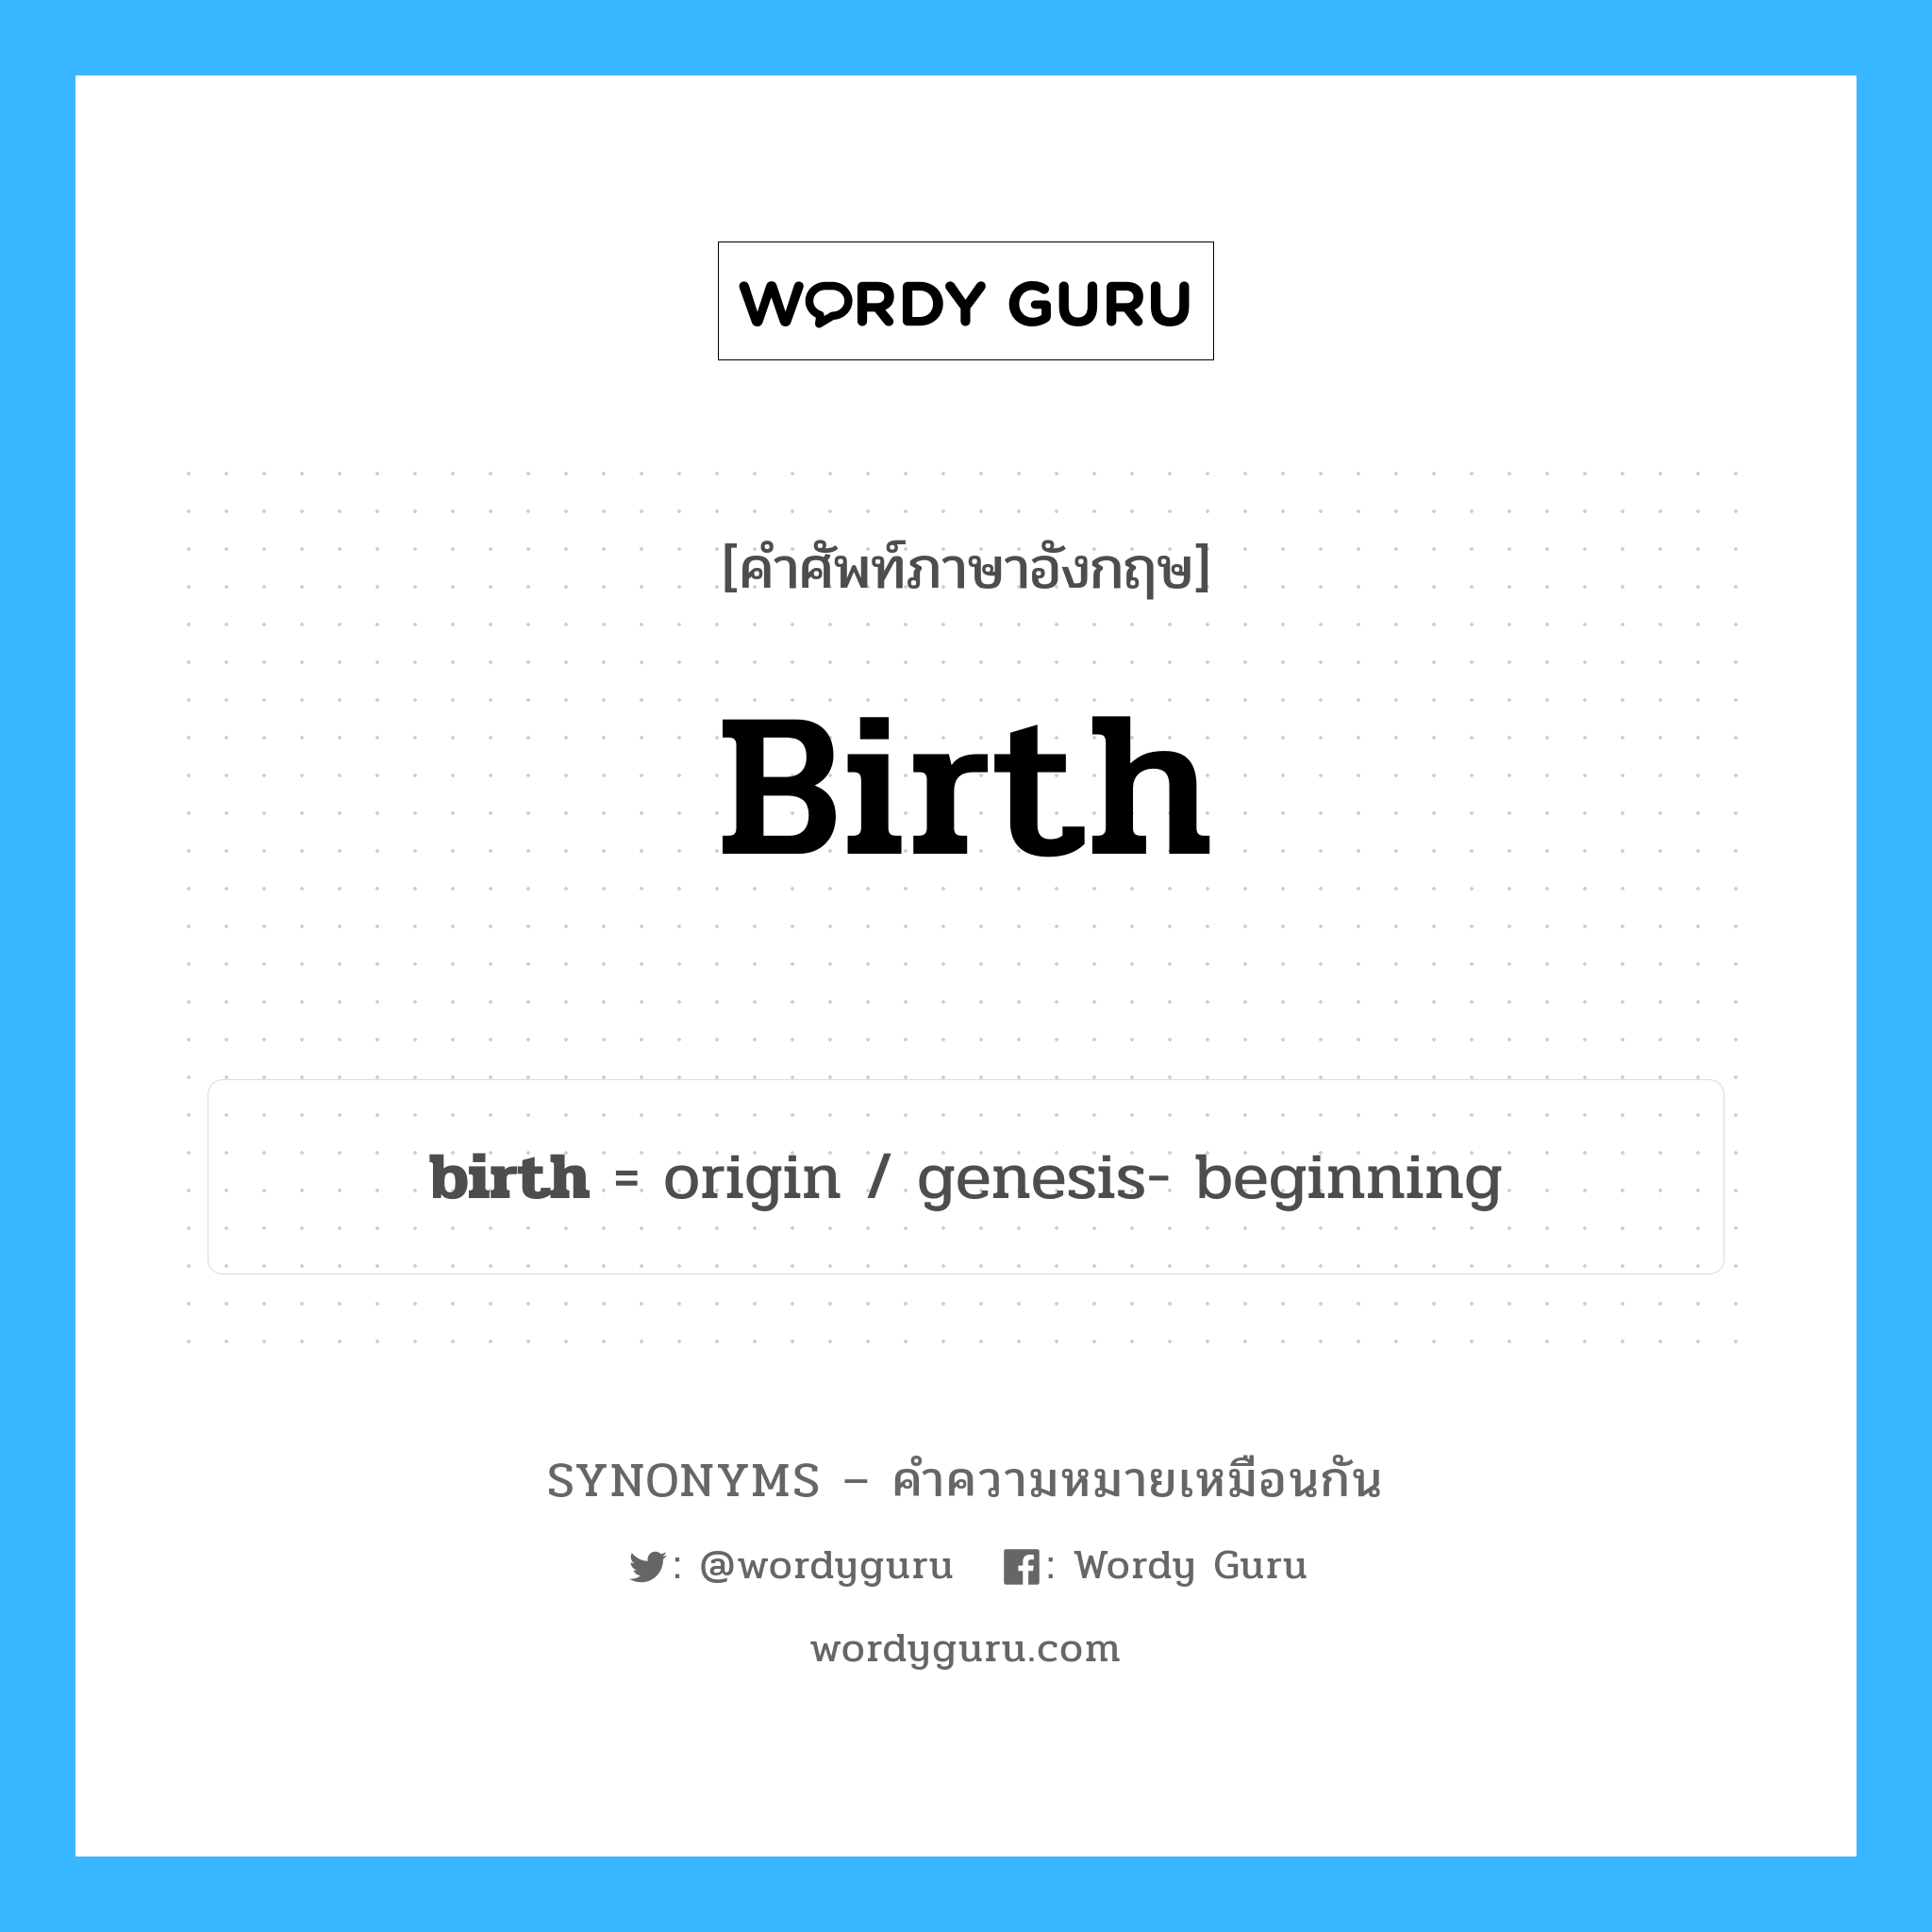 birth เป็นหนึ่งใน genesis- beginning และมีคำอื่น ๆ อีกดังนี้, คำศัพท์ภาษาอังกฤษ birth ความหมายคล้ายกันกับ genesis- beginning แปลว่า เริ่มต้นปฐมกาล หมวด genesis- beginning